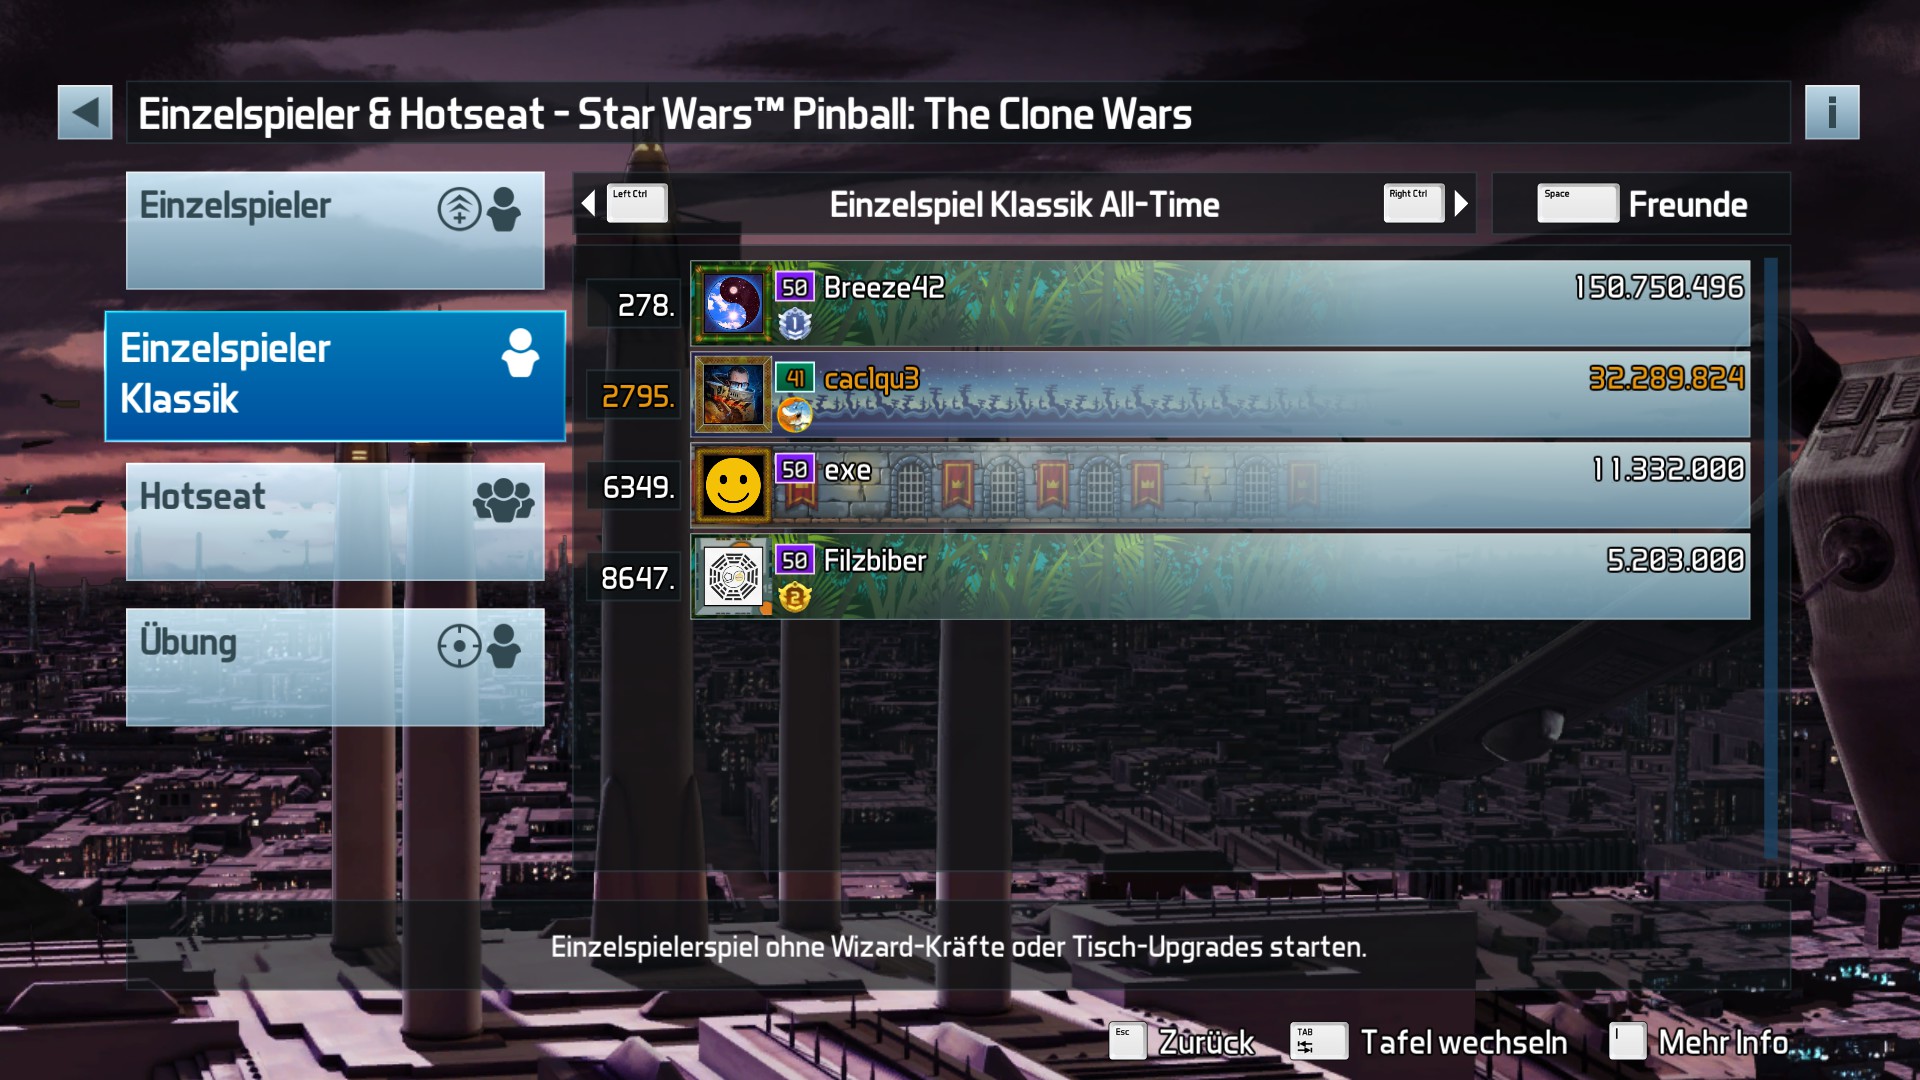 e2e4: Pinball FX3: Star Wars Pinball: The Clone Wars [Classic] (PC) 32,289,824 points on 2022-05-19 02:45:30